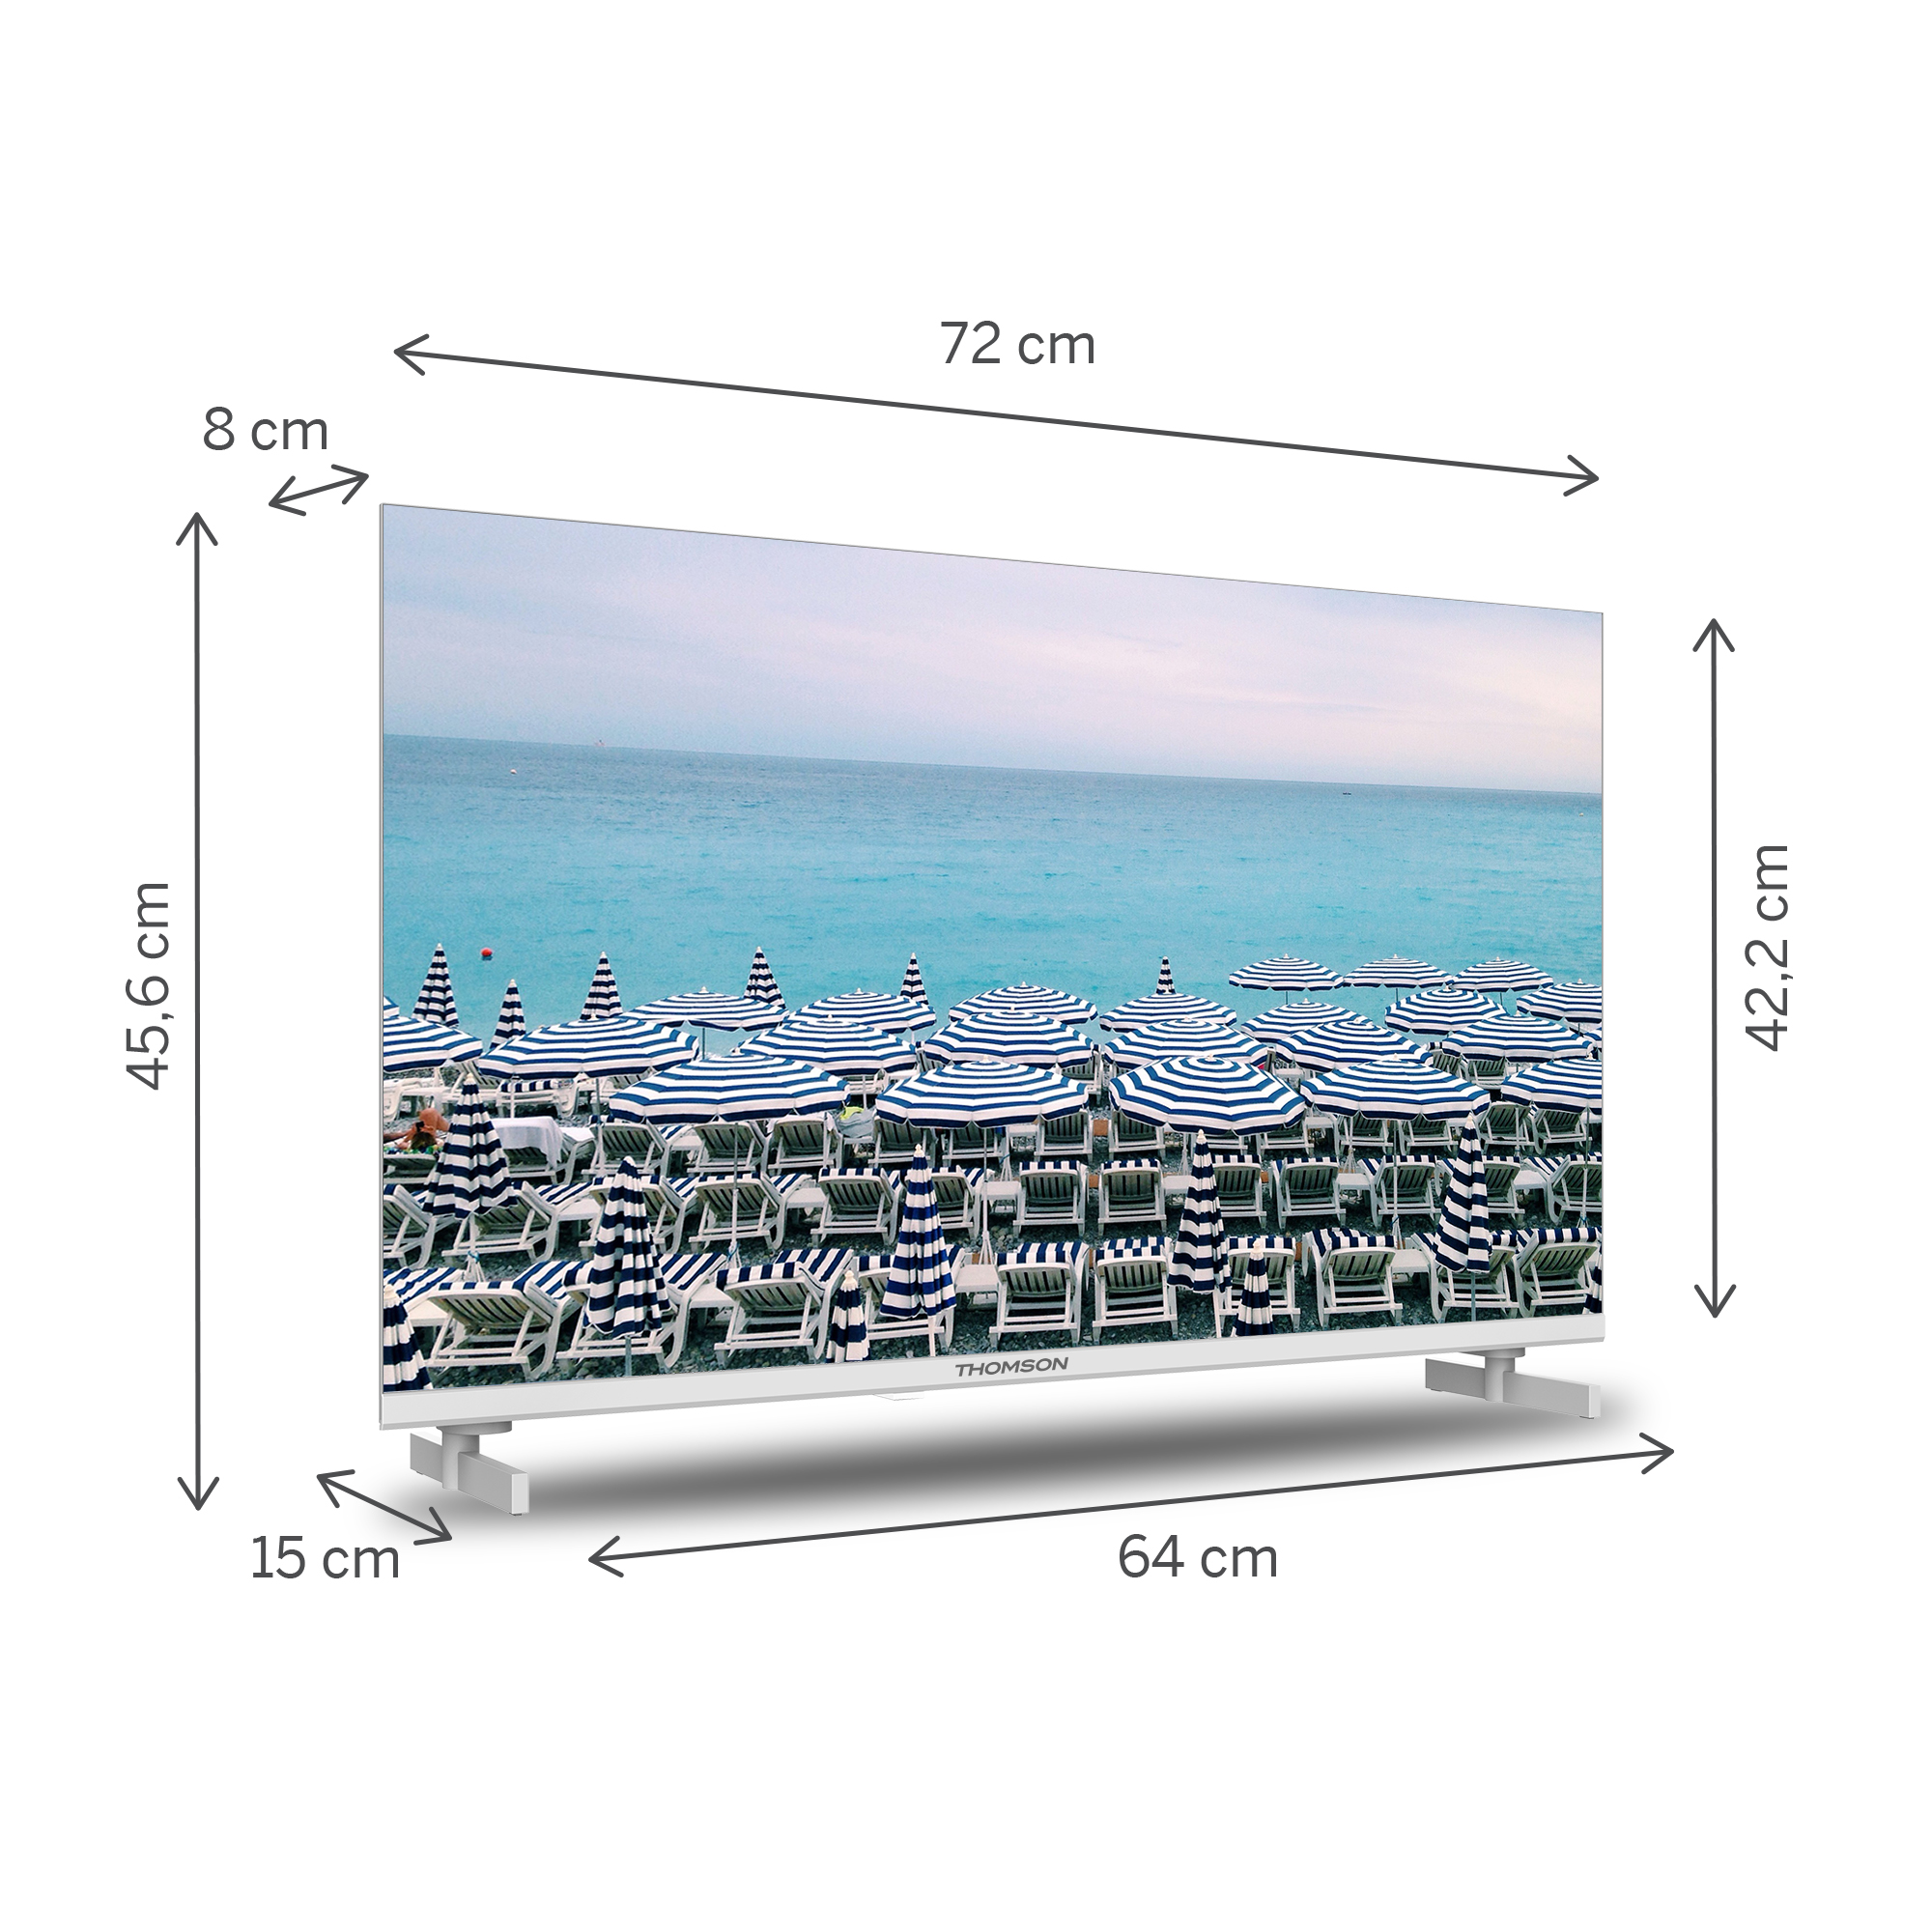 THOMSON 32HD2S13W LED TV Zoll 32 81 HD) (Flat, / cm